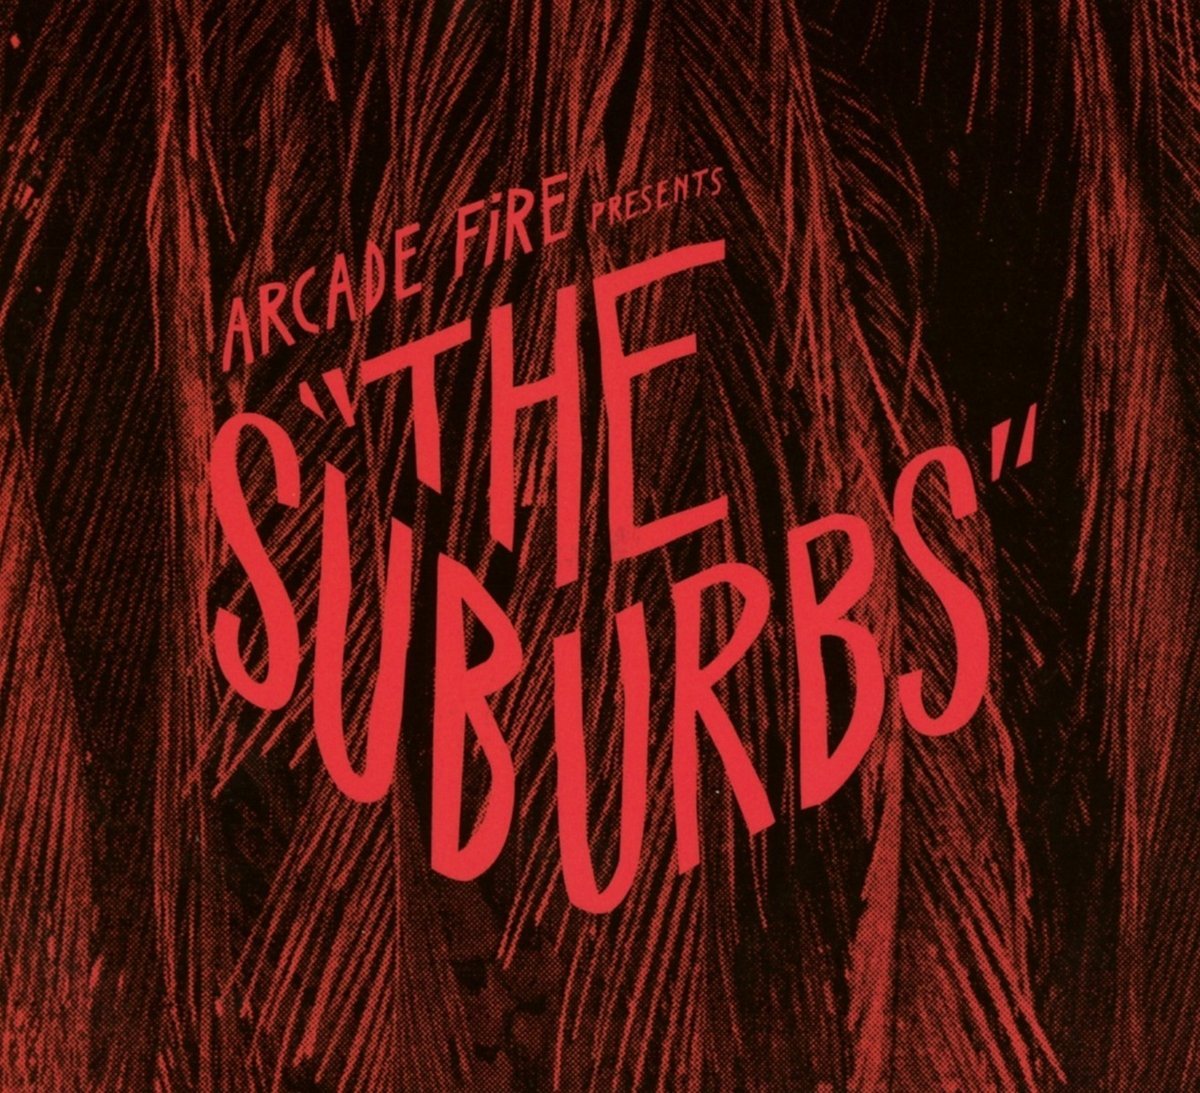 The Suburbs - CD | Arcade Fire image10